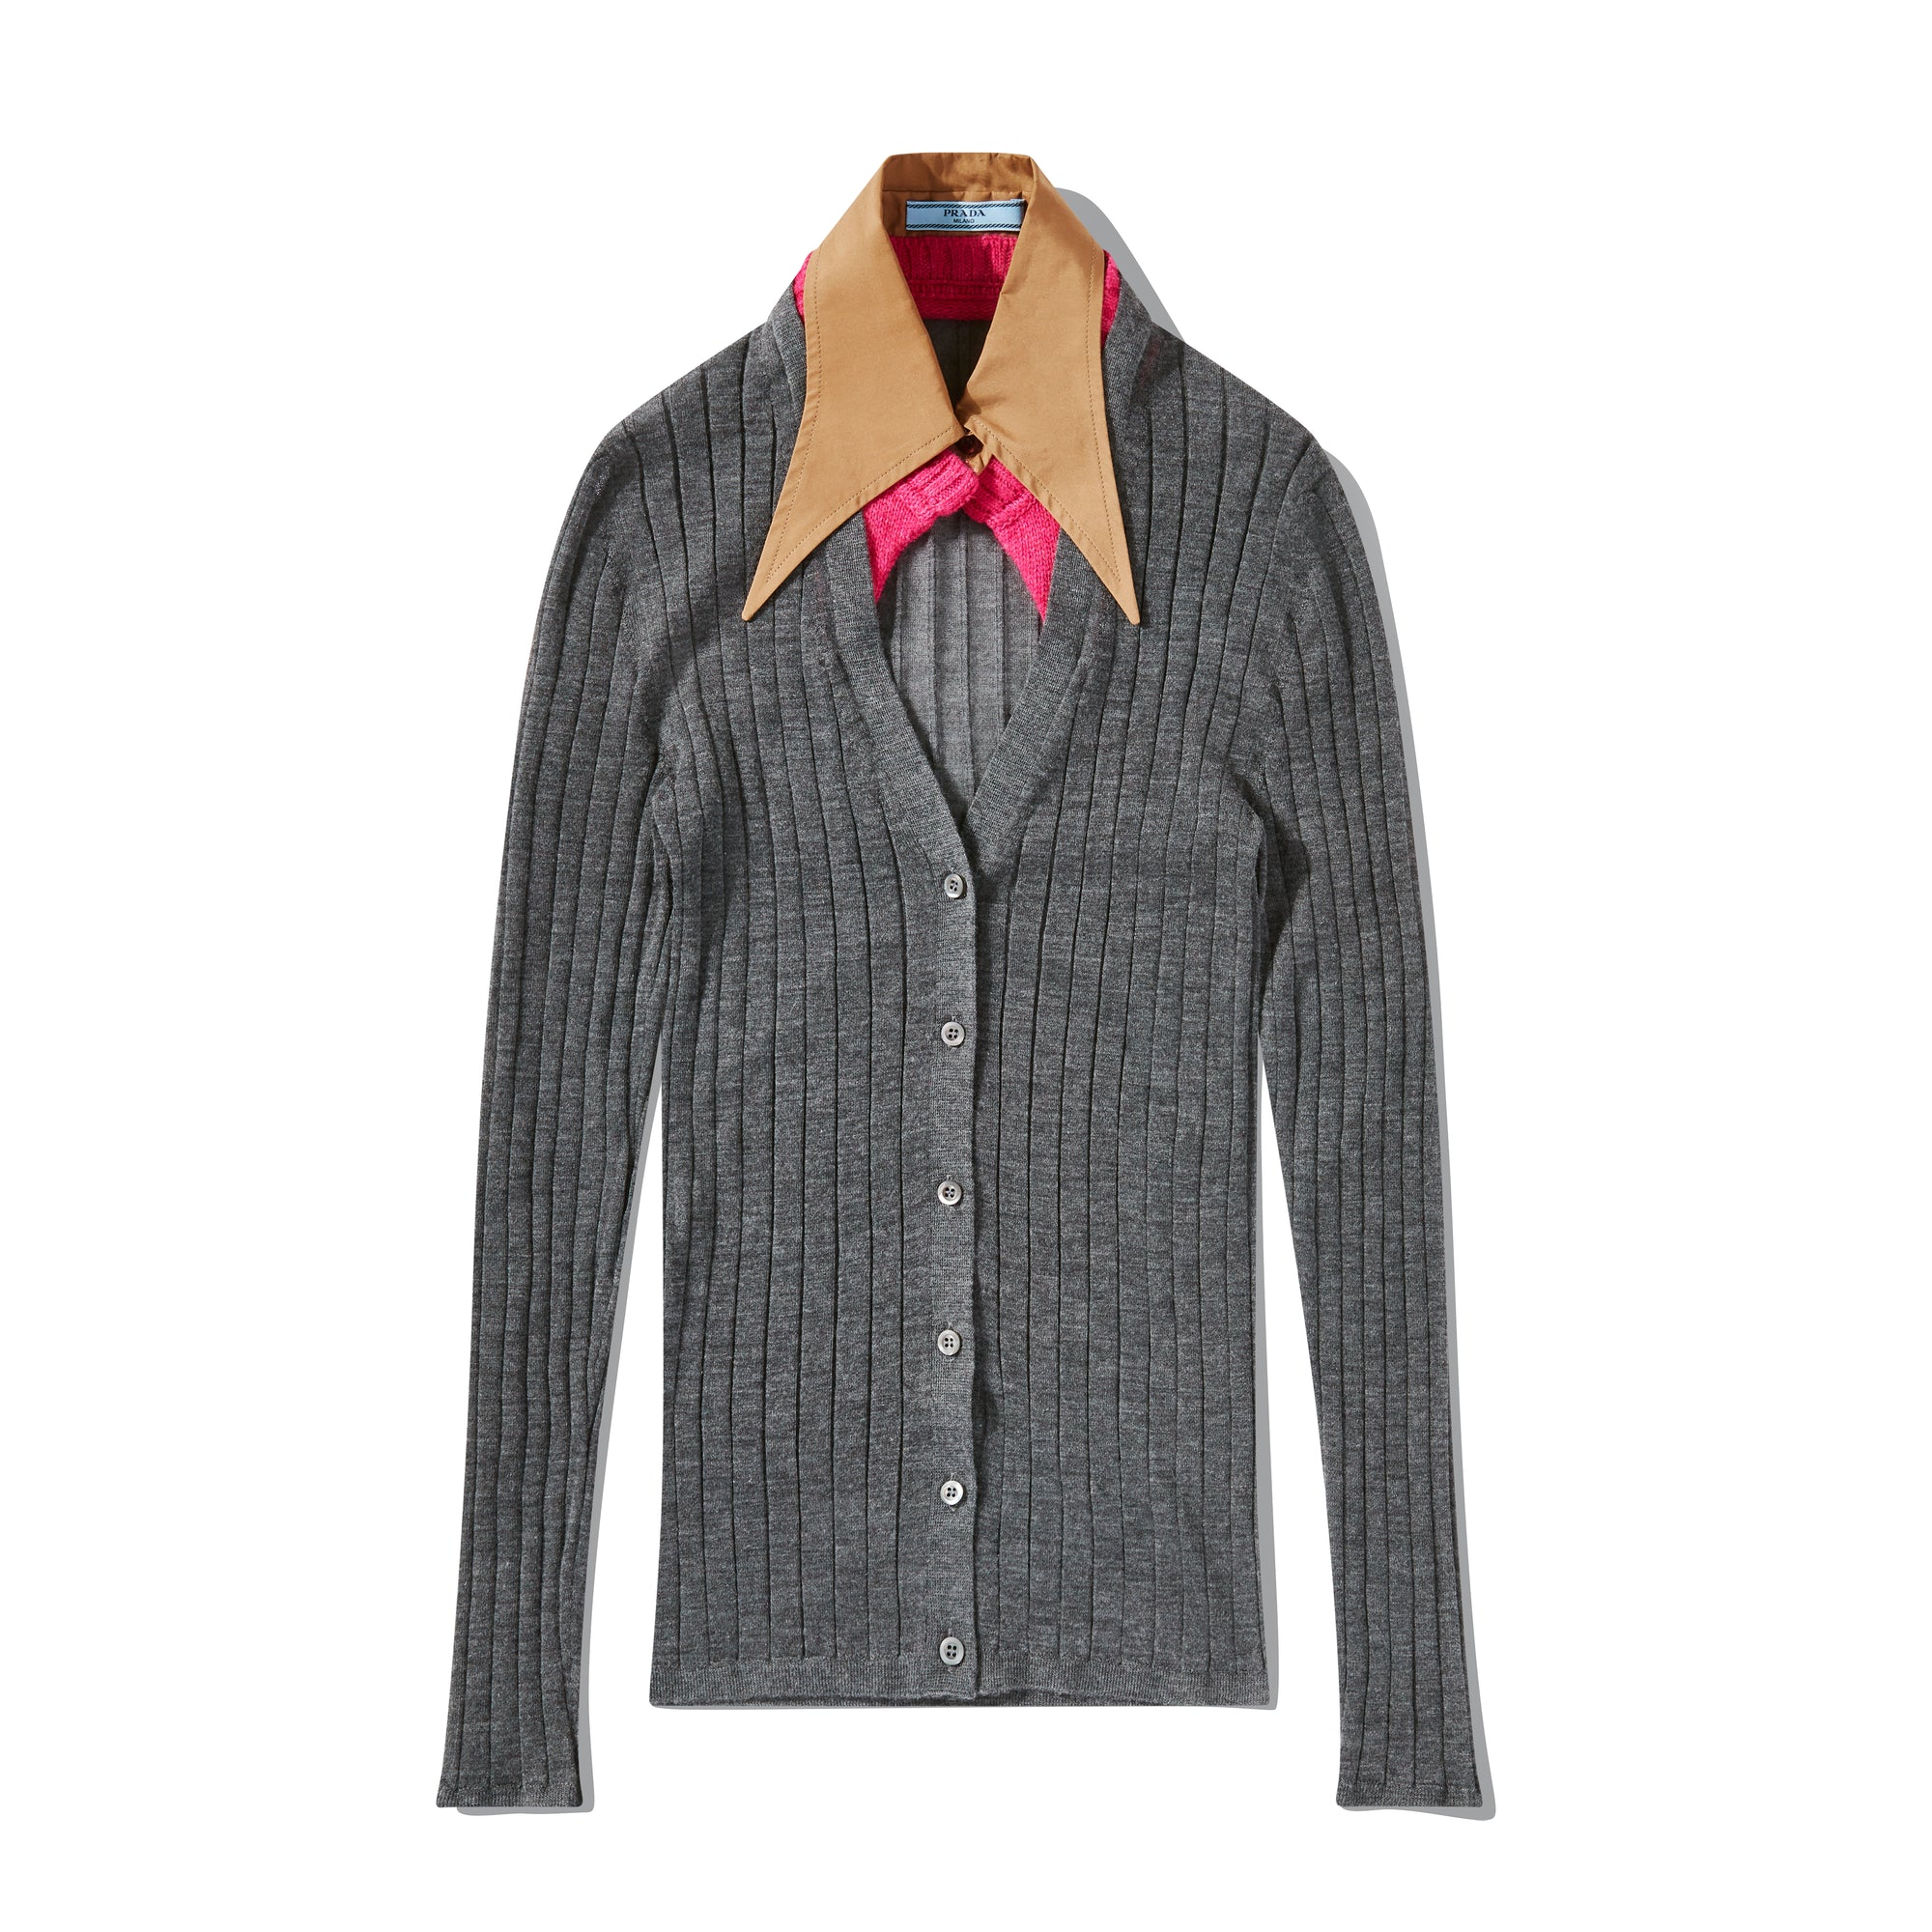 Prada - Women’s Cashmere and Silk Cardigan with Collar - (Slate Grey) view 5